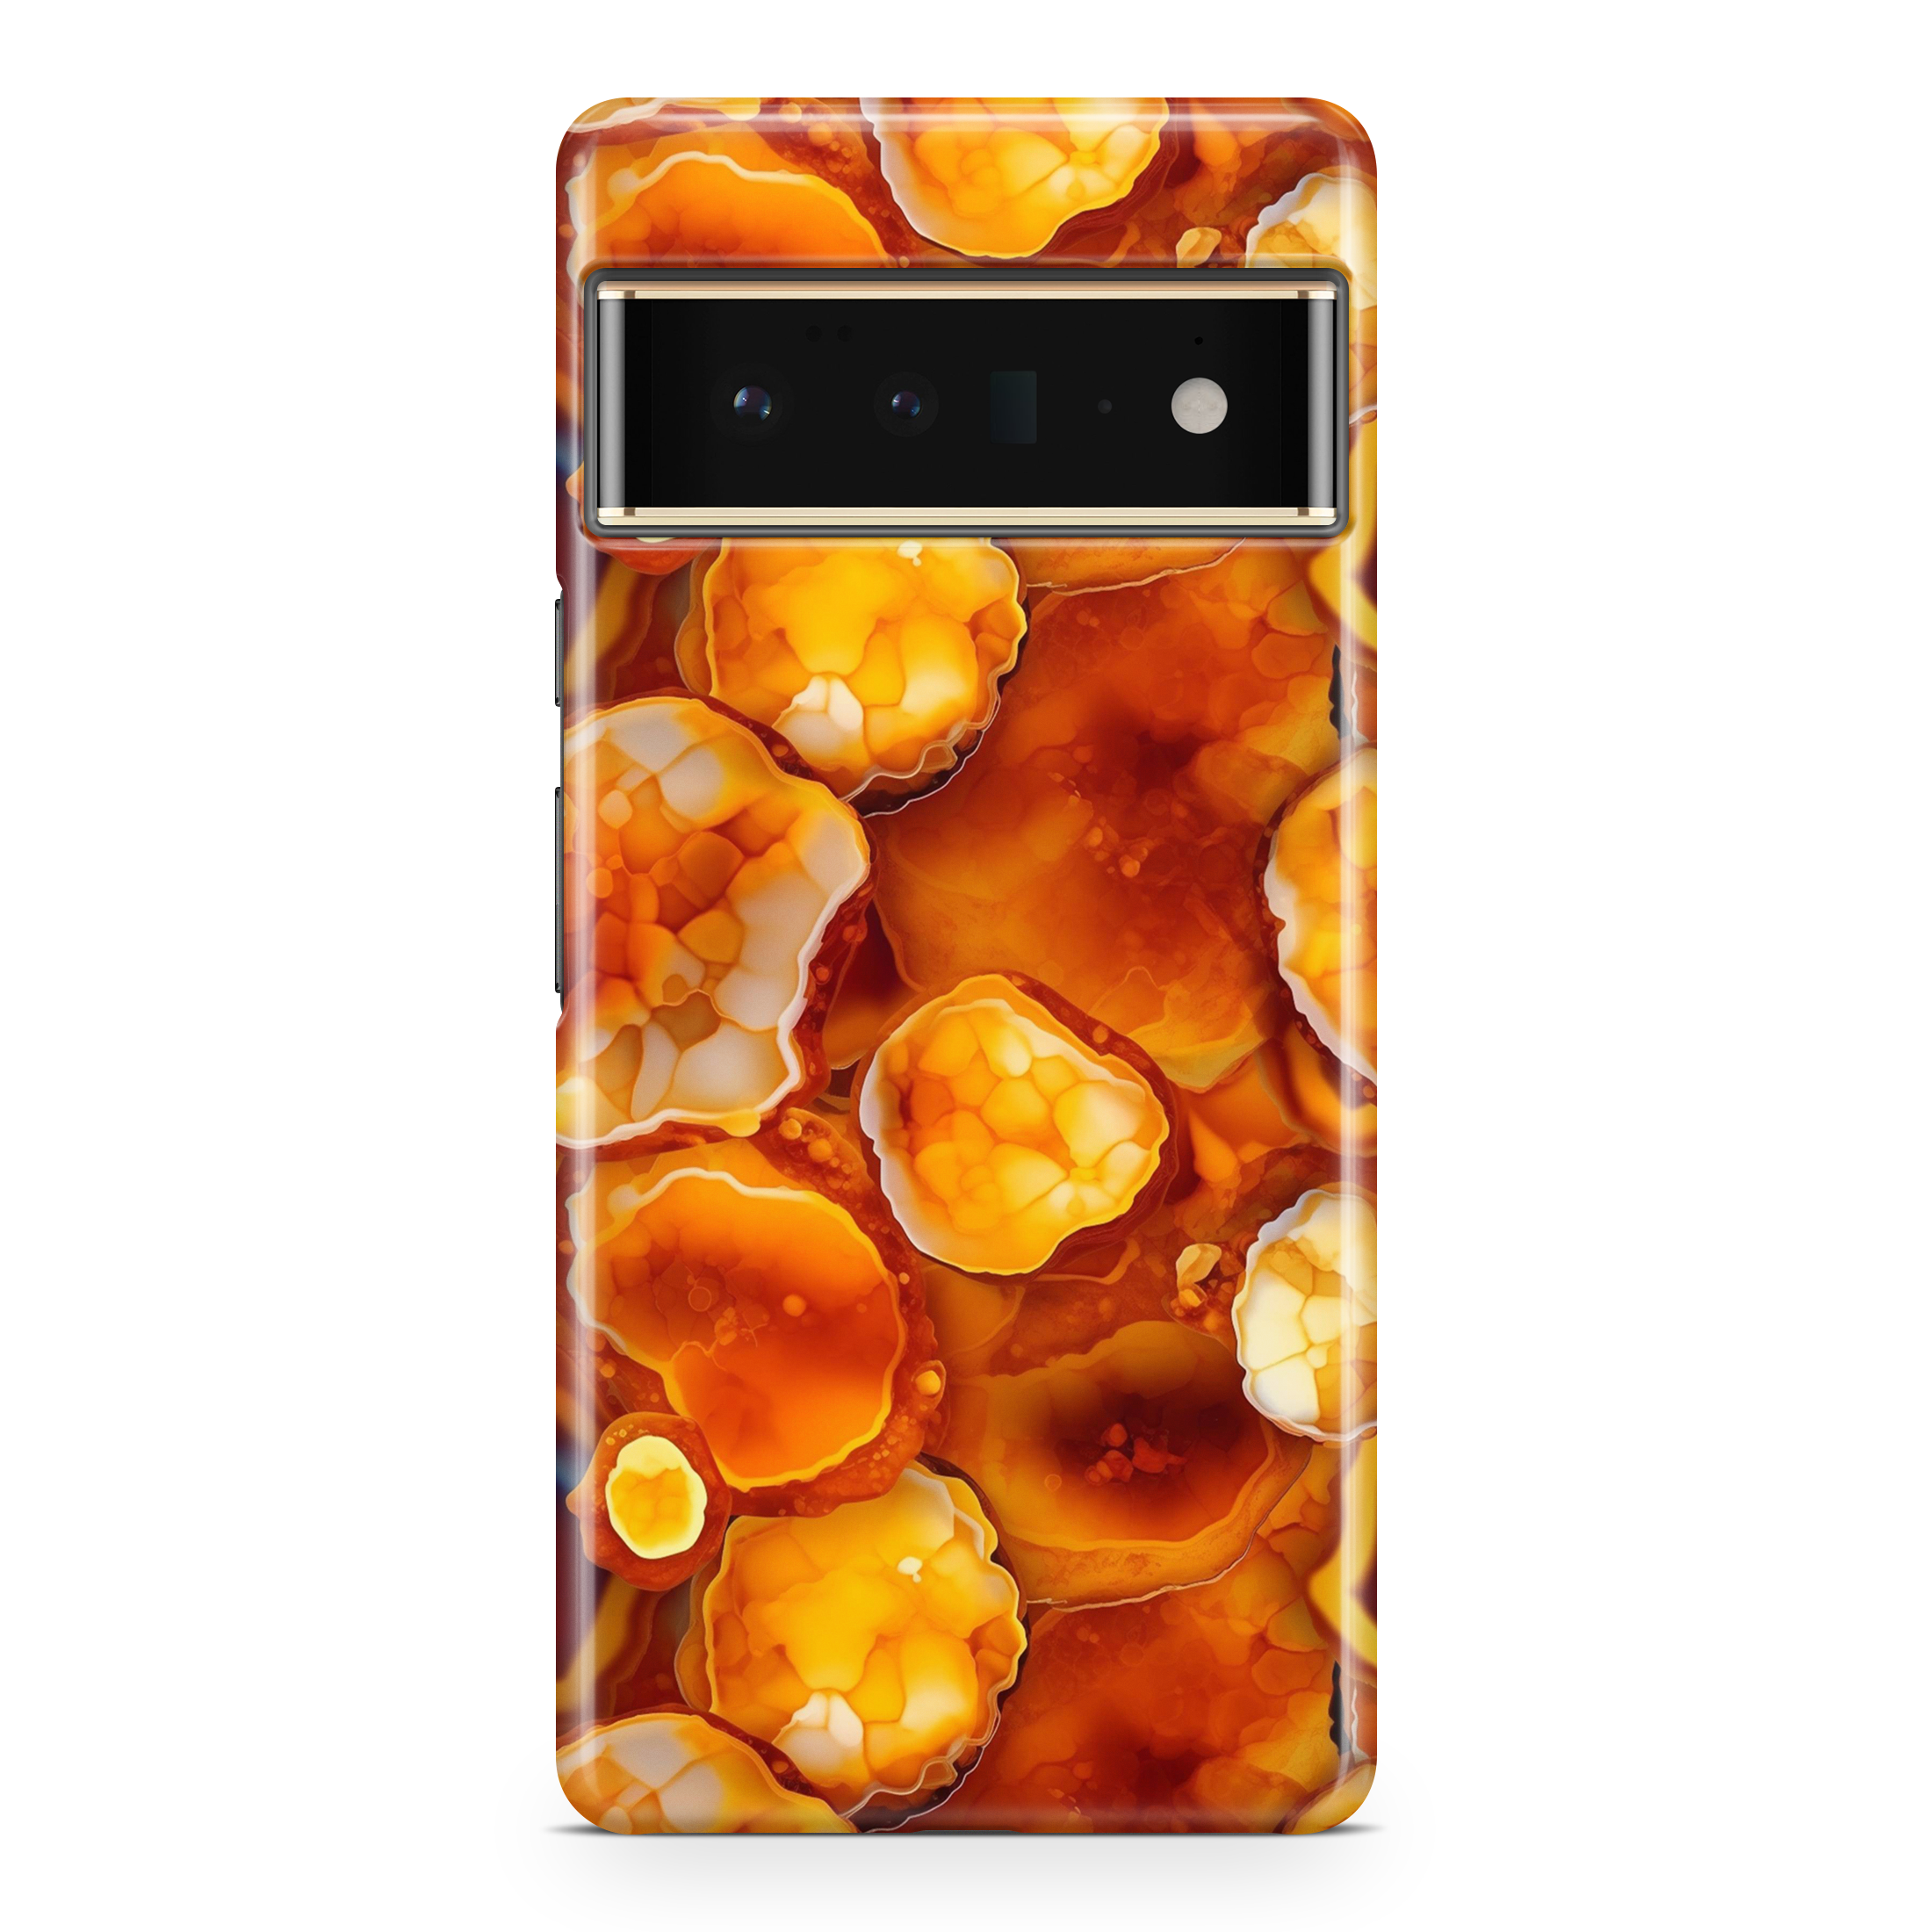 Orange Geode - Google phone case designs by CaseSwagger